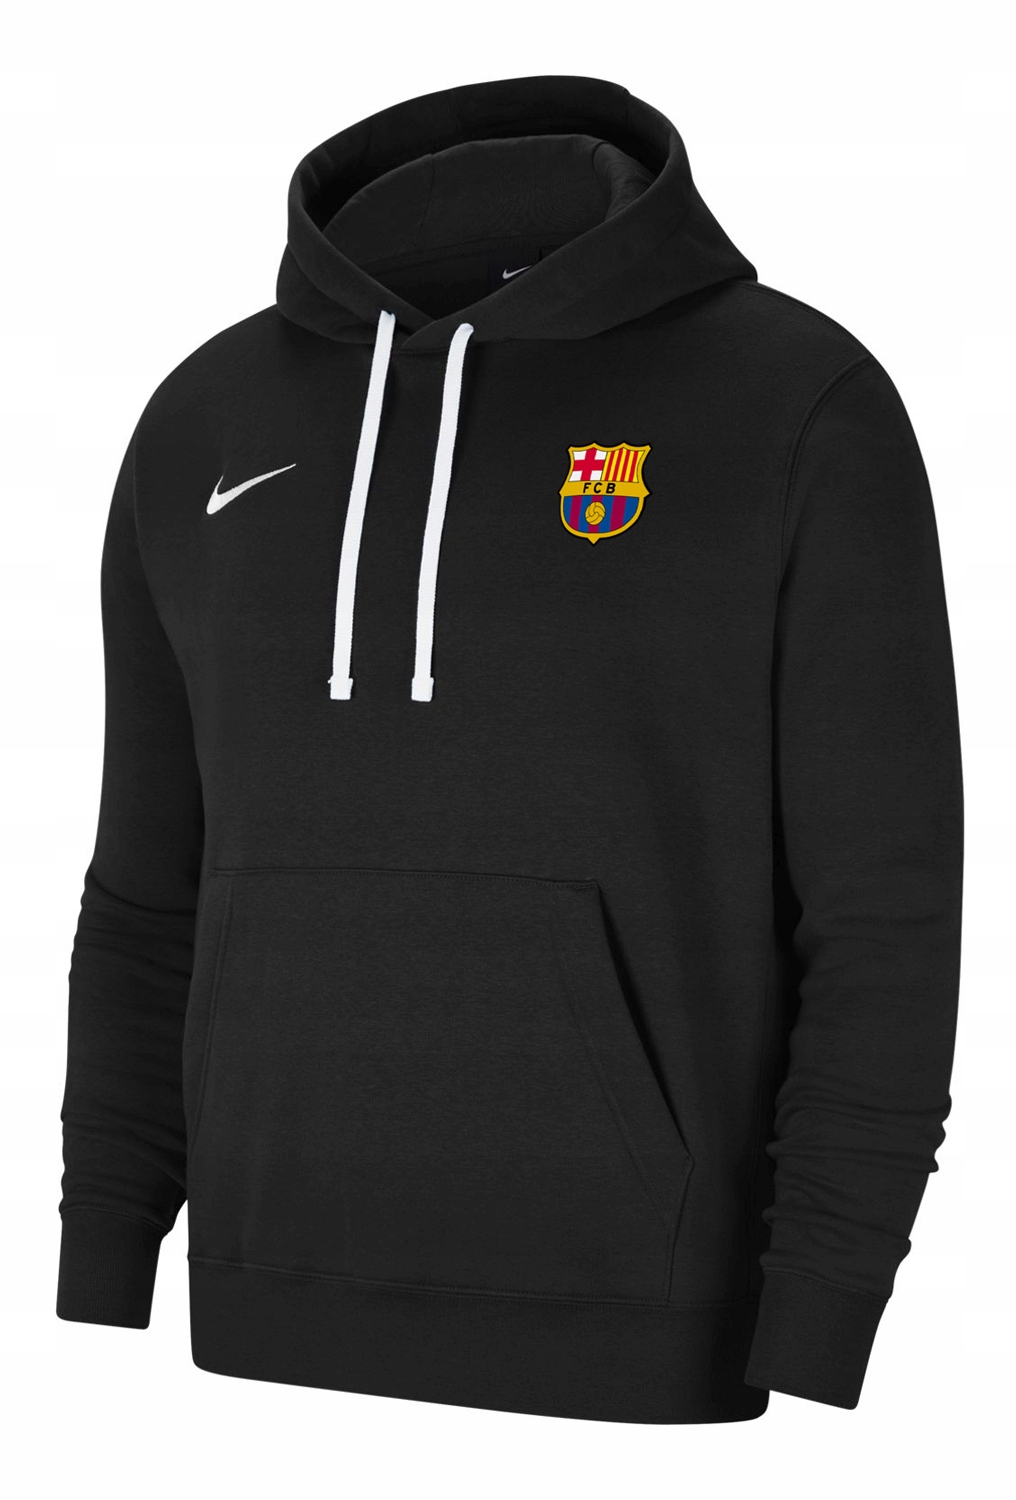 Pánská mikina Nike FC Barcelona L za 1011 Kč od Skierniewice - Allegro -  (13518956170)